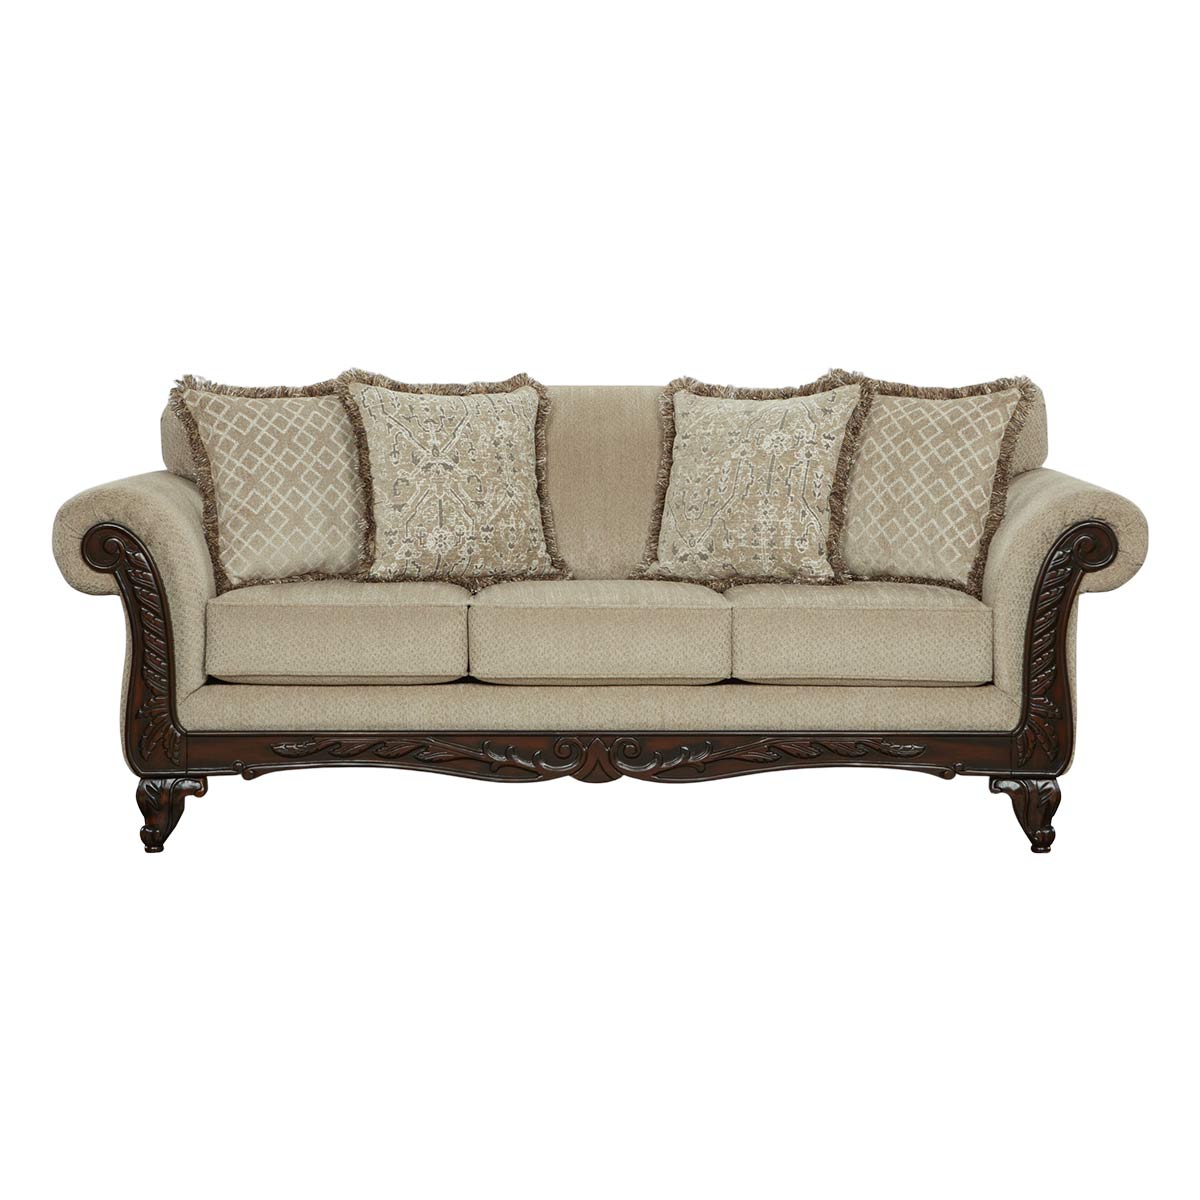 Affordable Furniture Emma Traditional Sofa